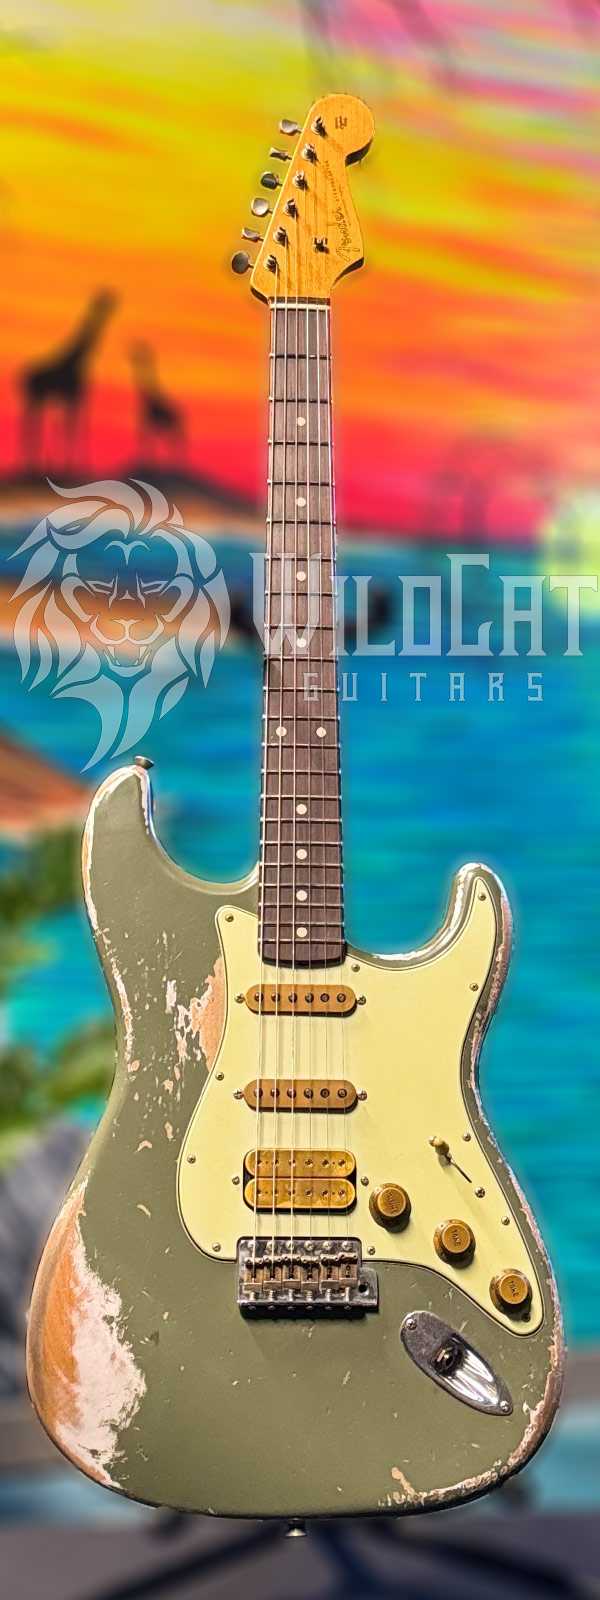 WildCat Exclusive Fender Custom Shop Alley Cat Strat “Vintage” Drab Green R130913